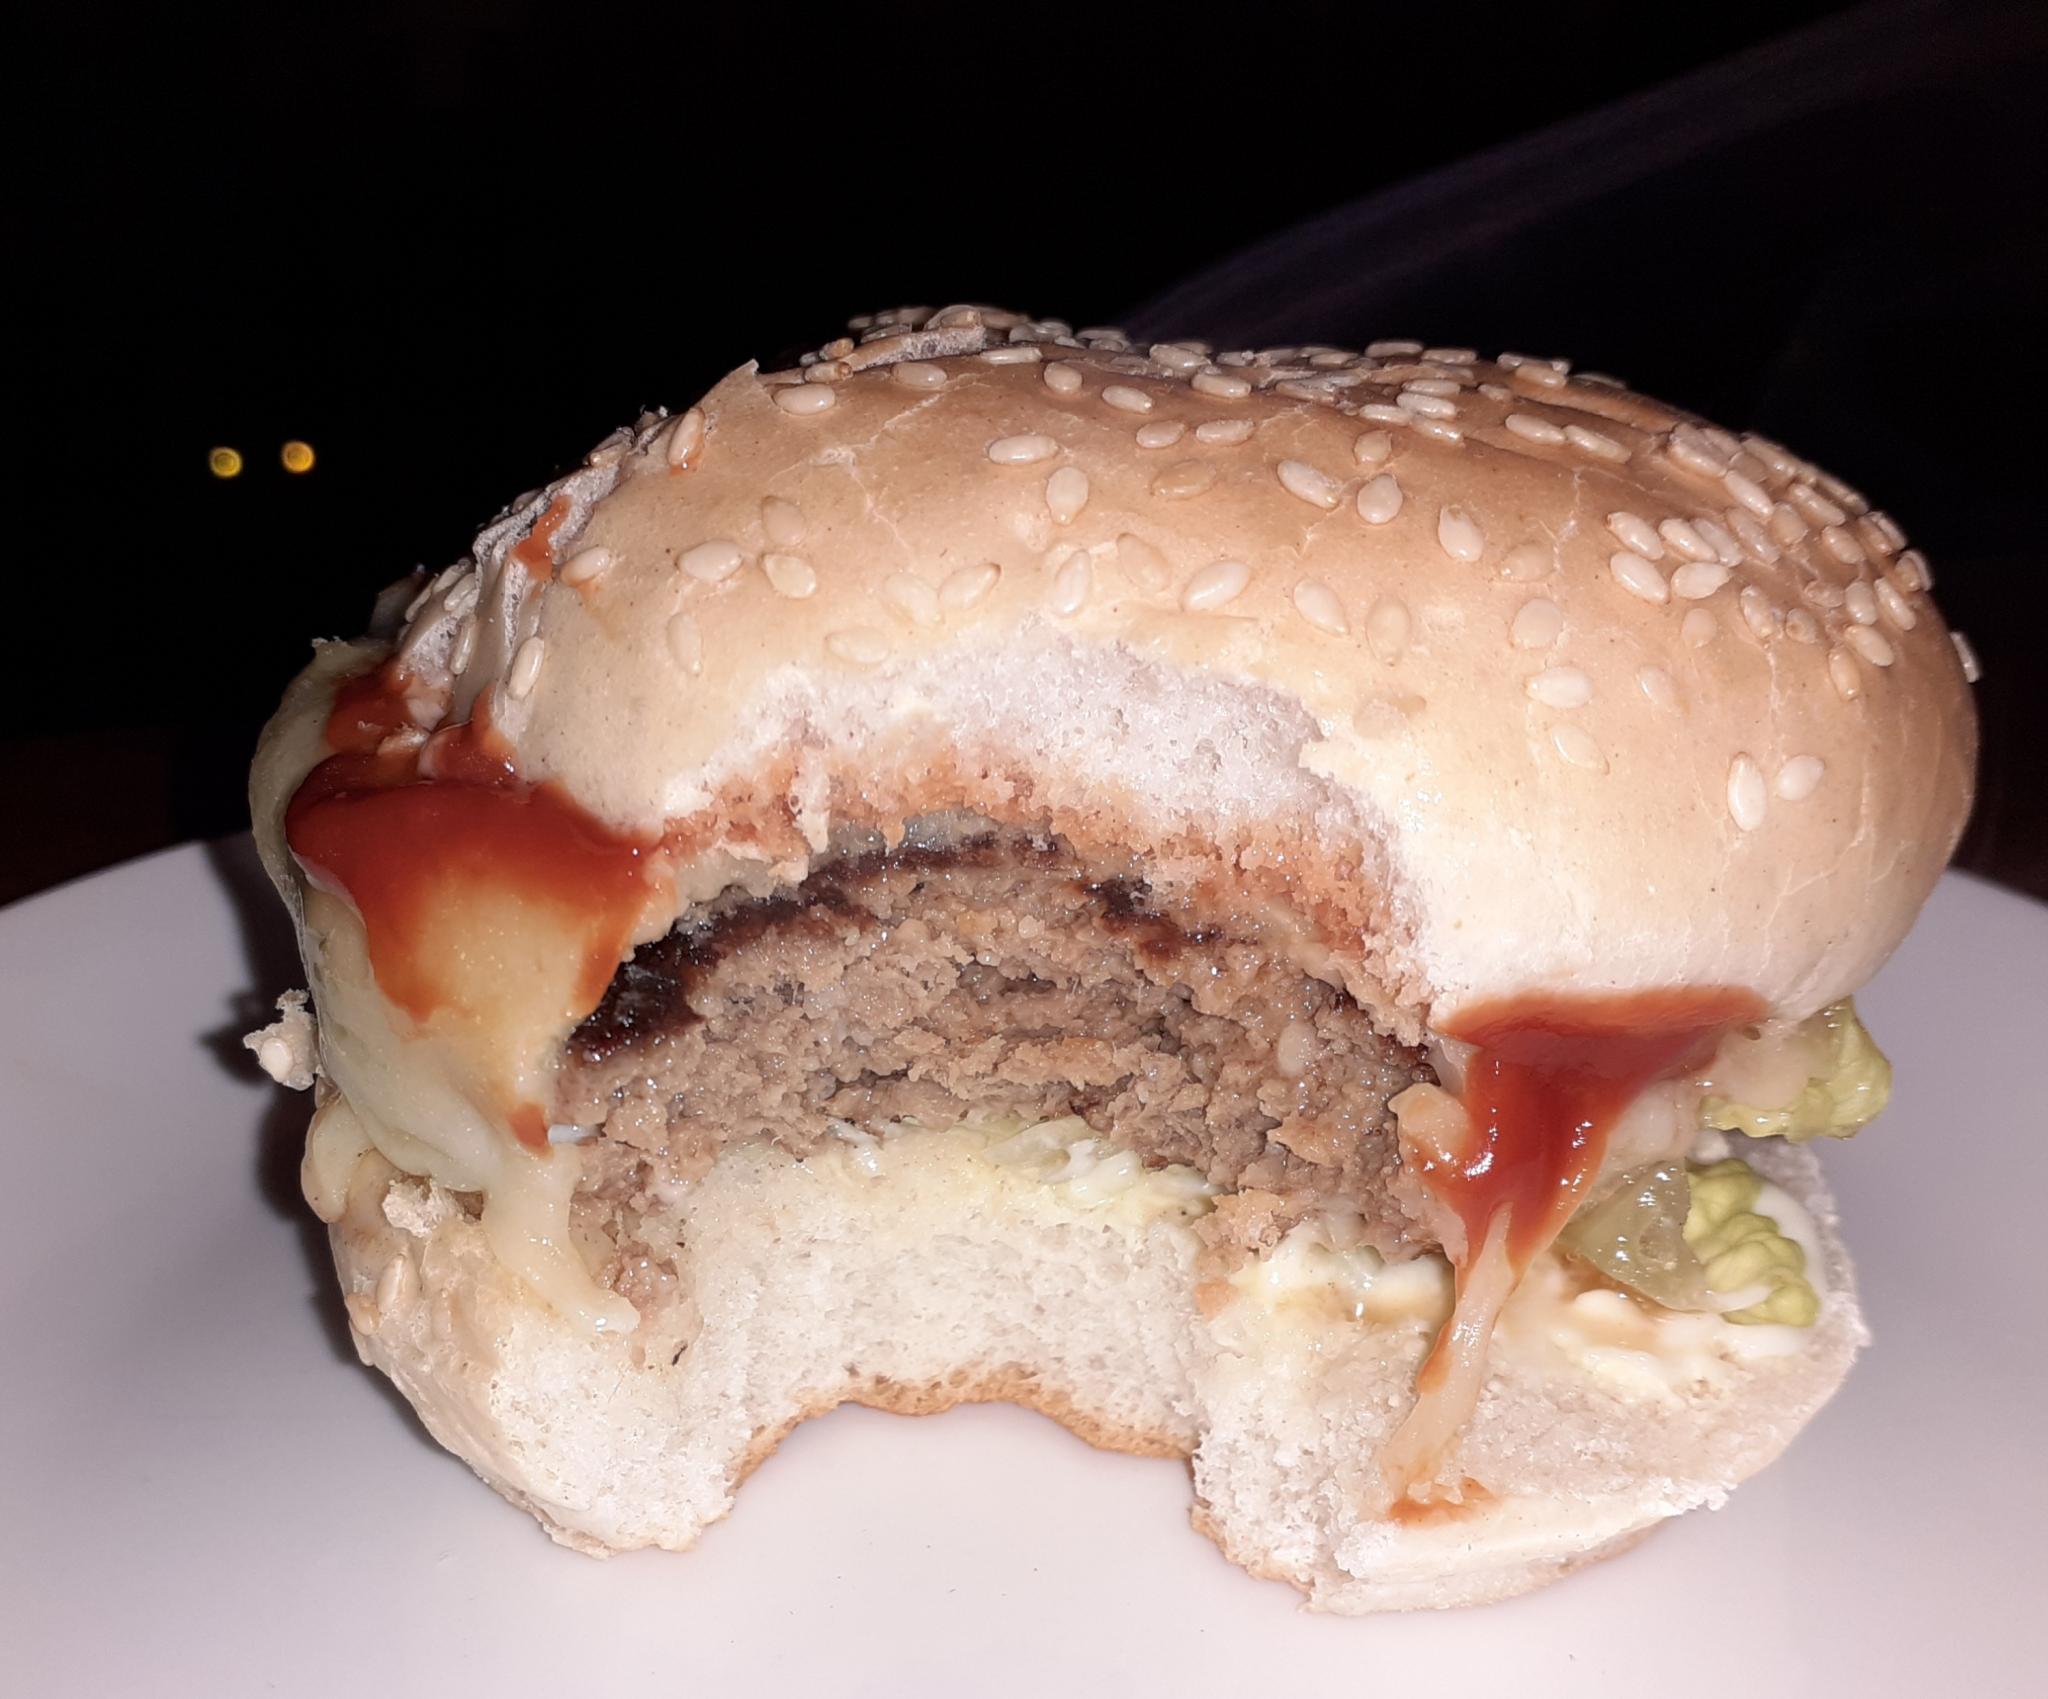 The perfect burger-20211219_194214-jpg